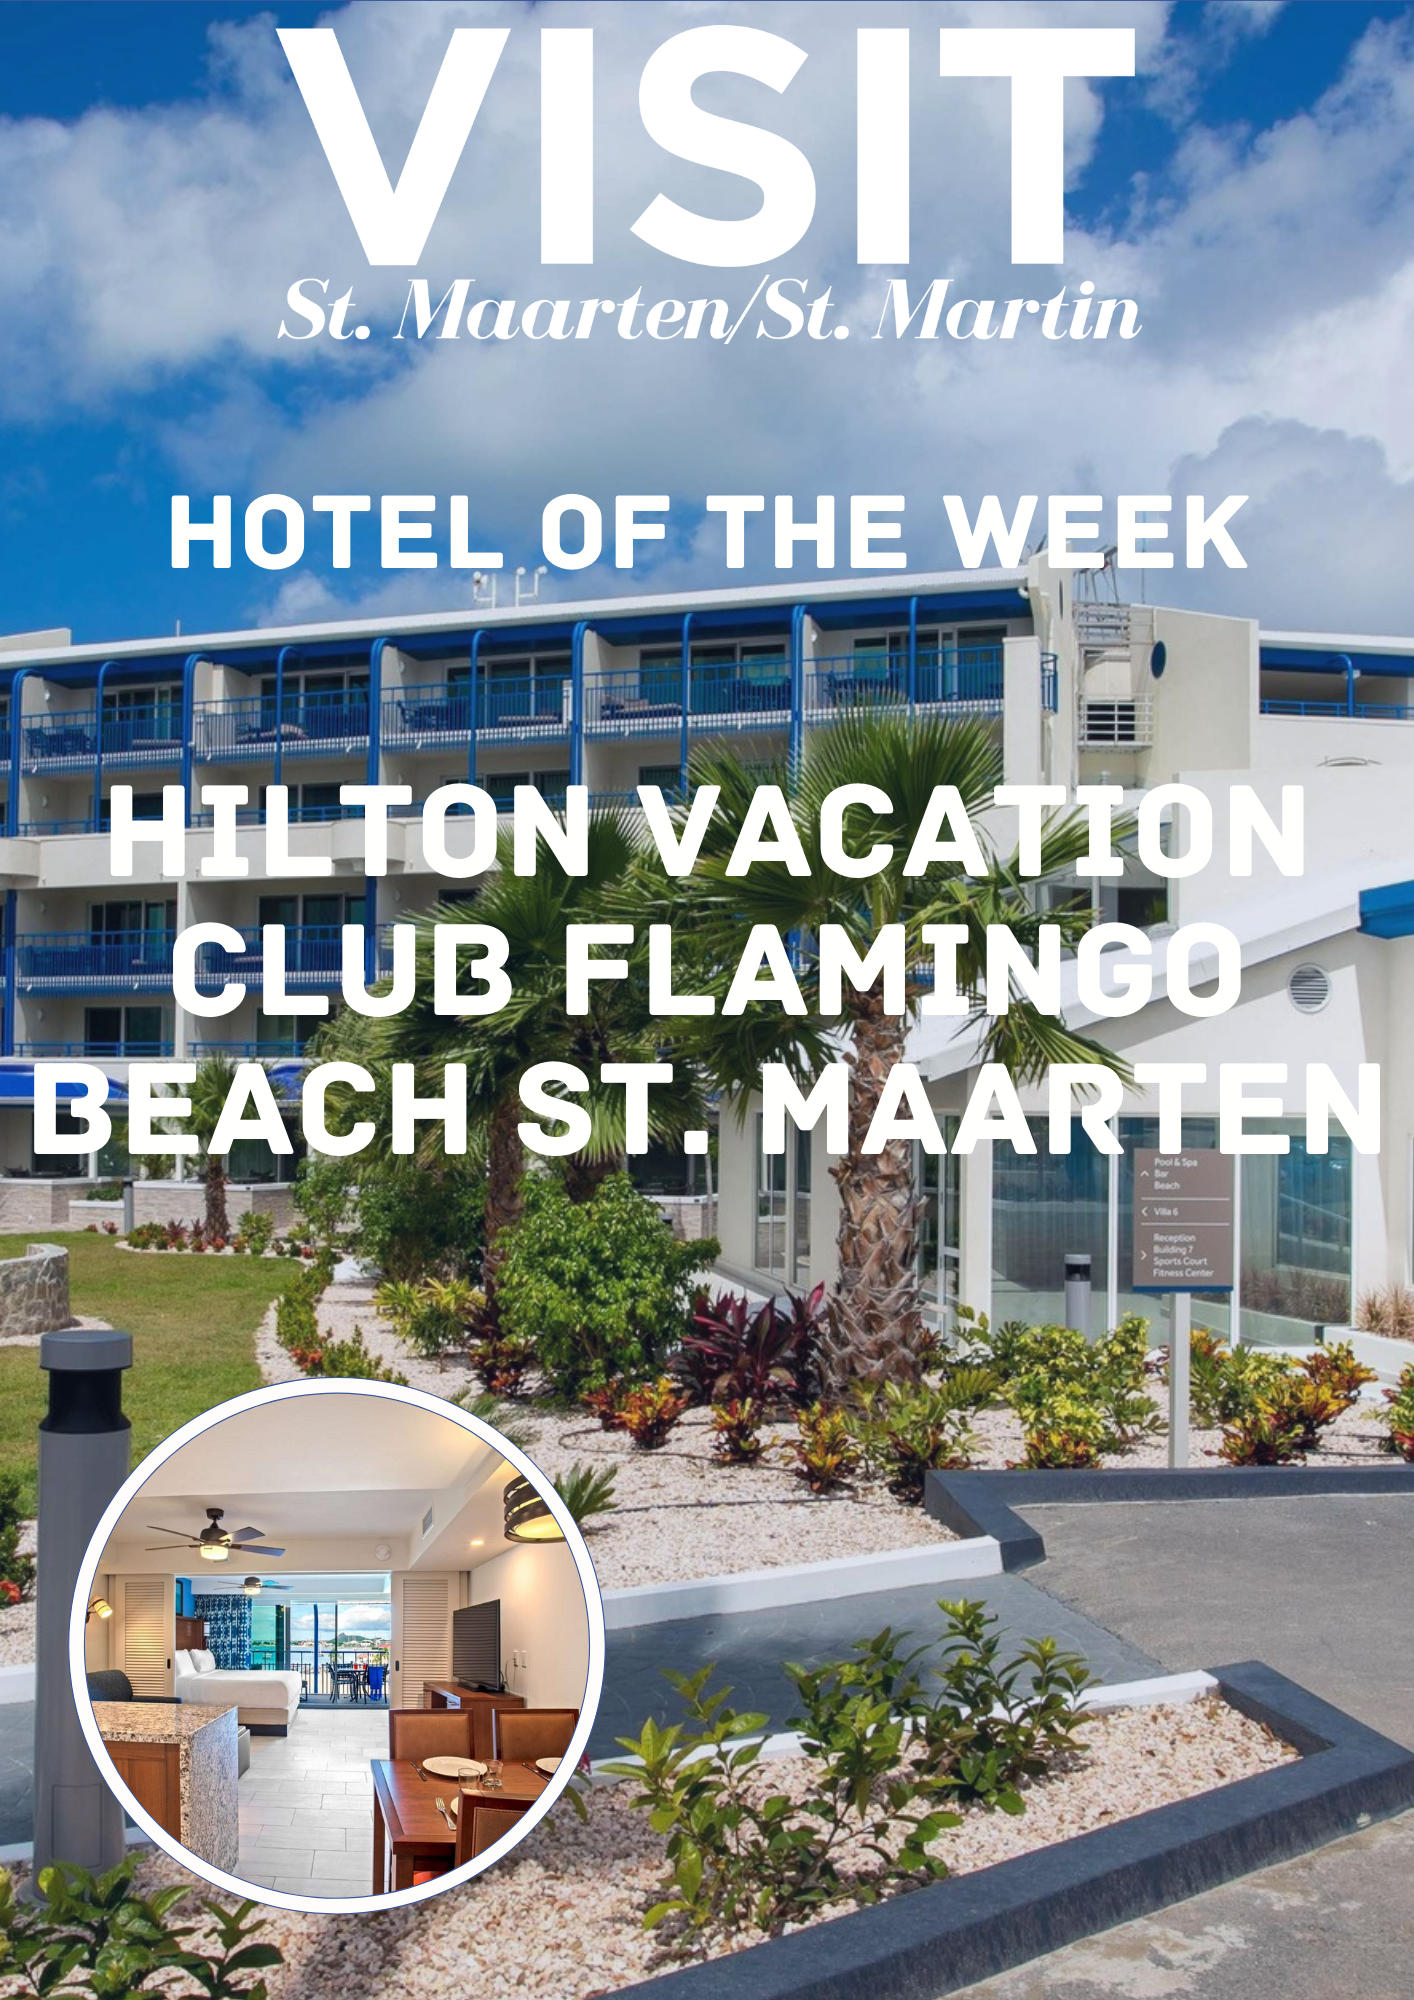 Hilton Vacation Club Flamingo Beach St. Maarten property